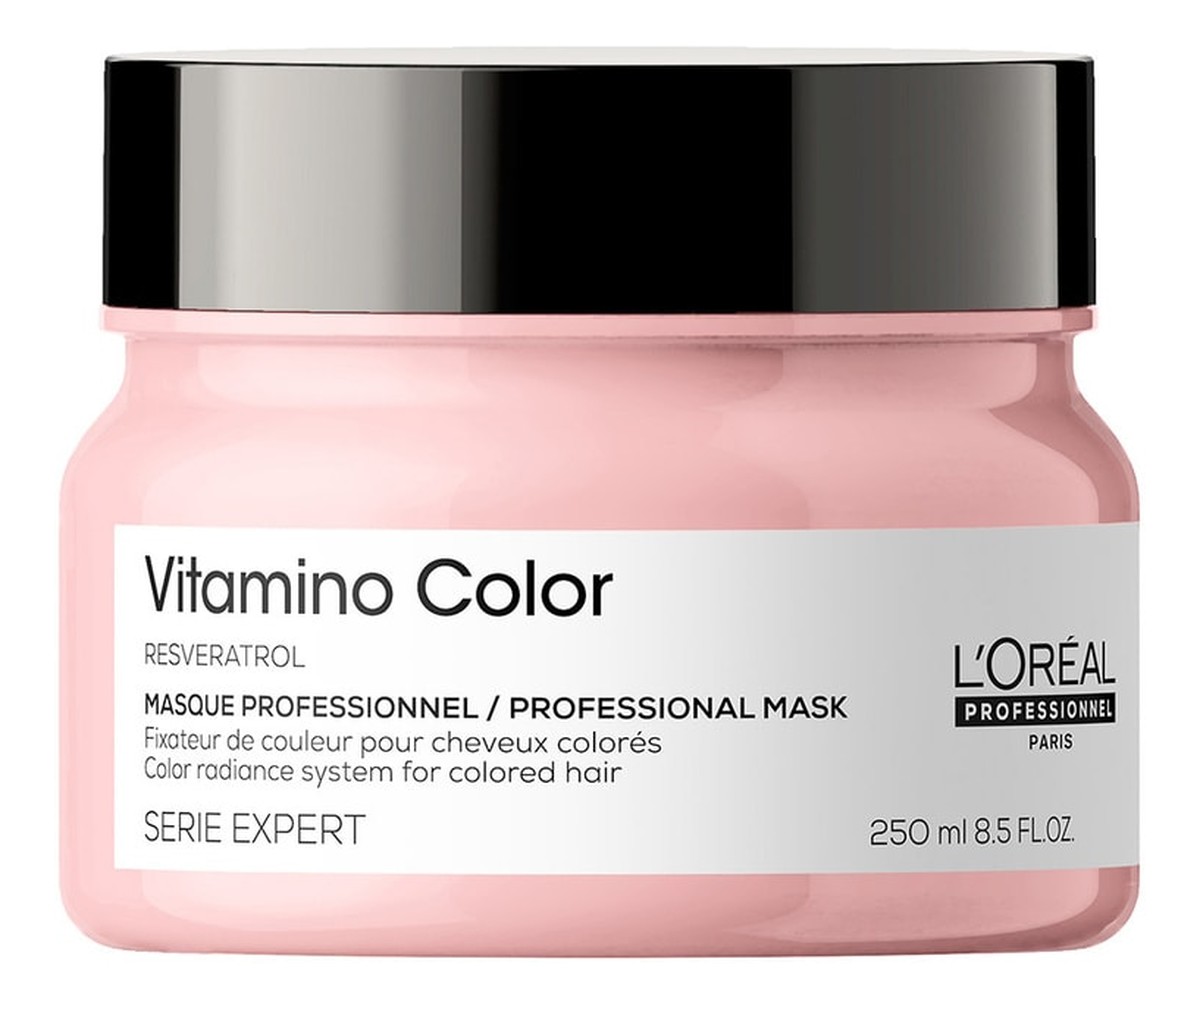 Serie expert vitamino color mask maska do włosów koloryzowanych